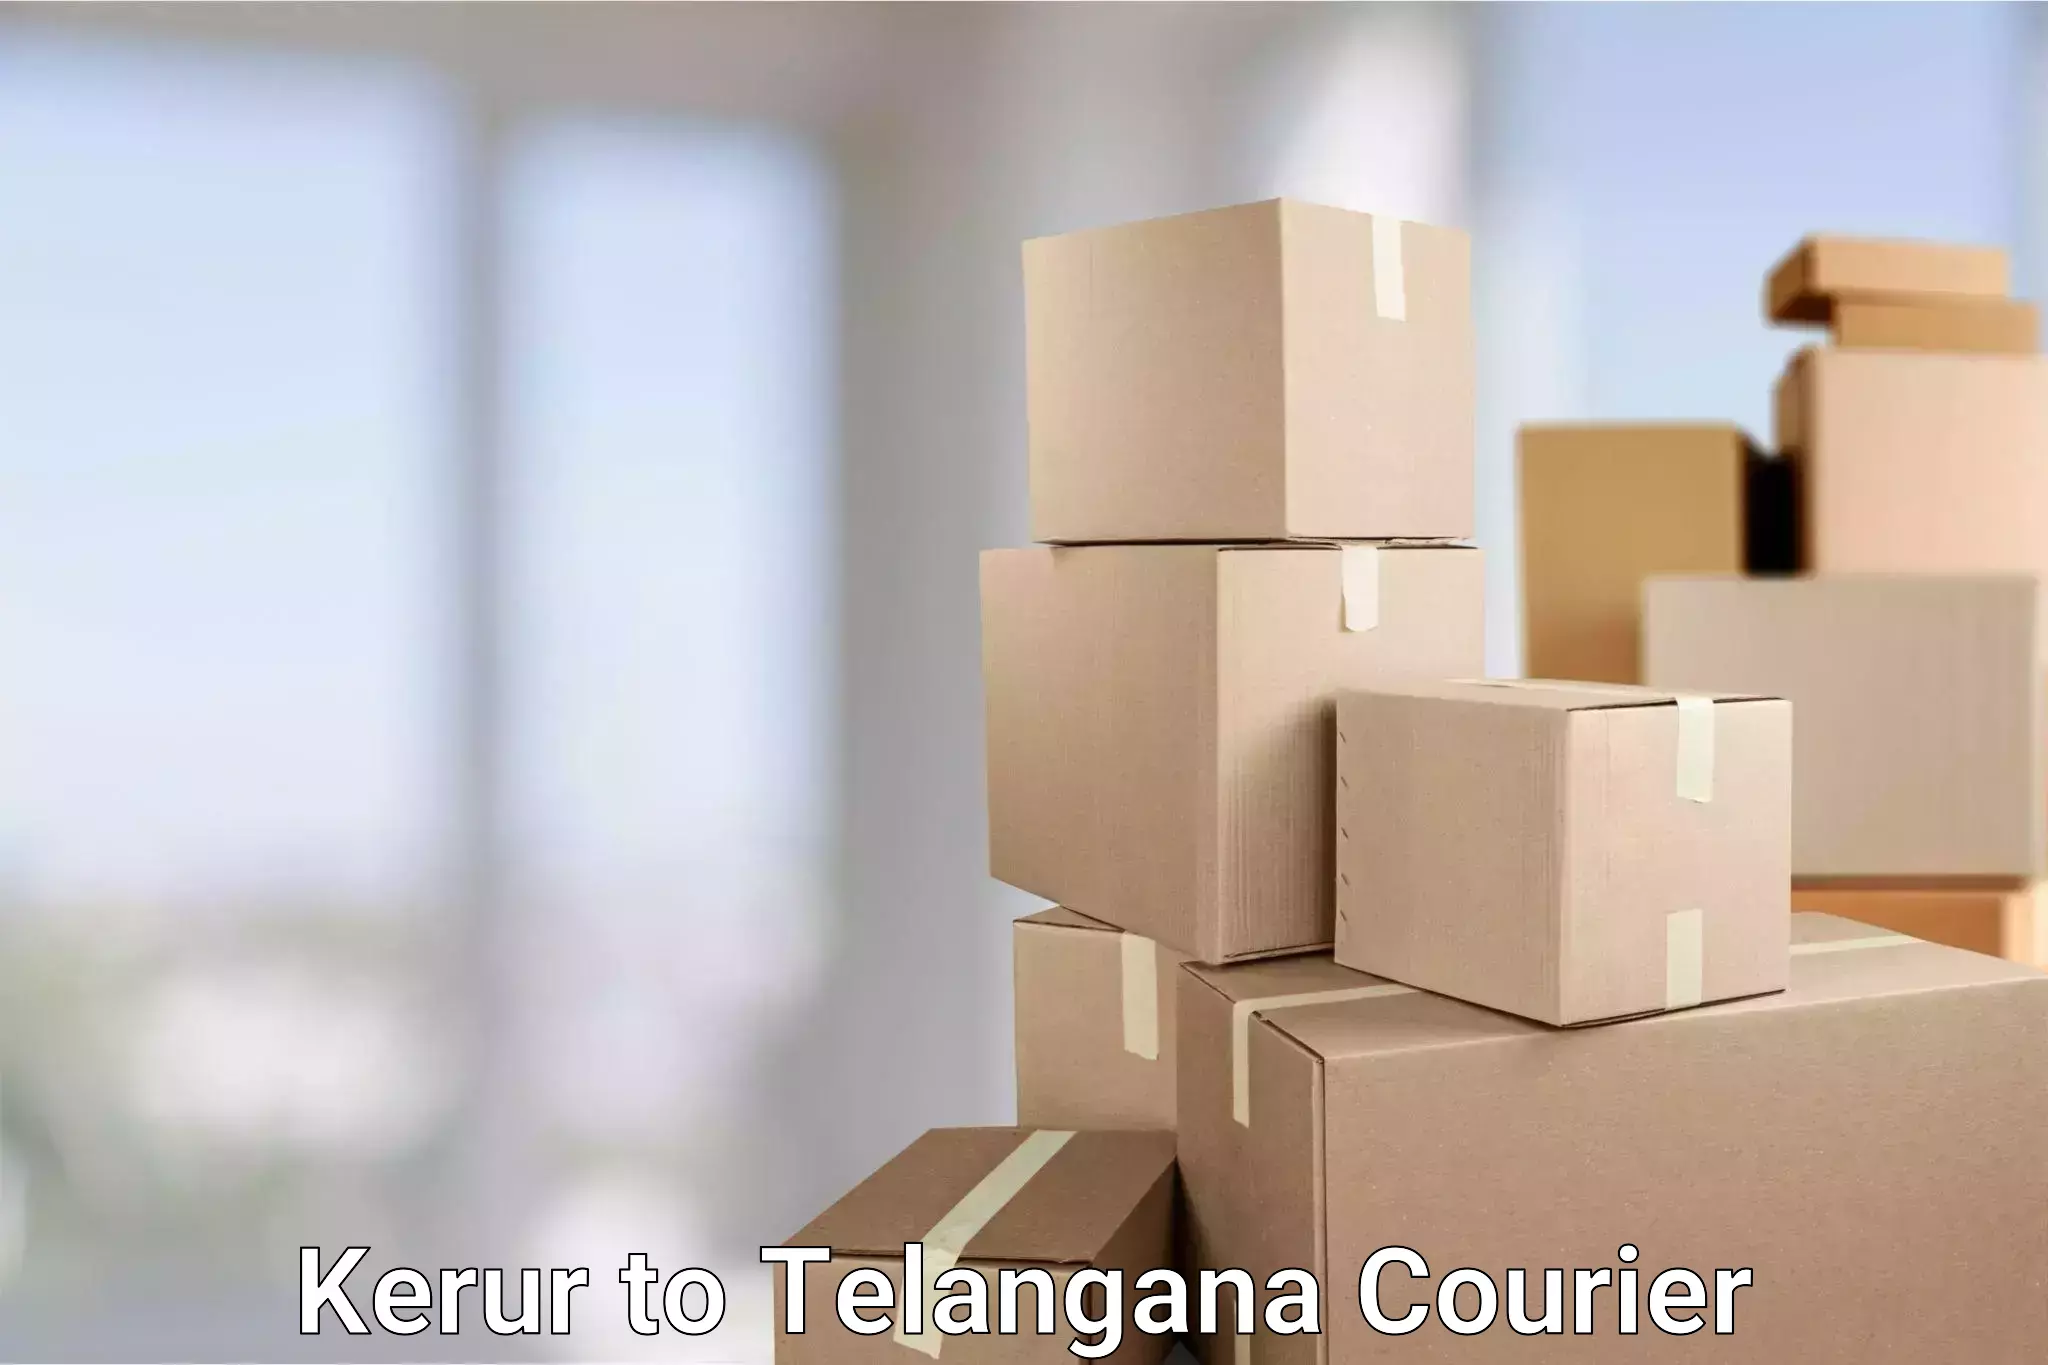 Enhanced tracking features Kerur to Ramannapeta